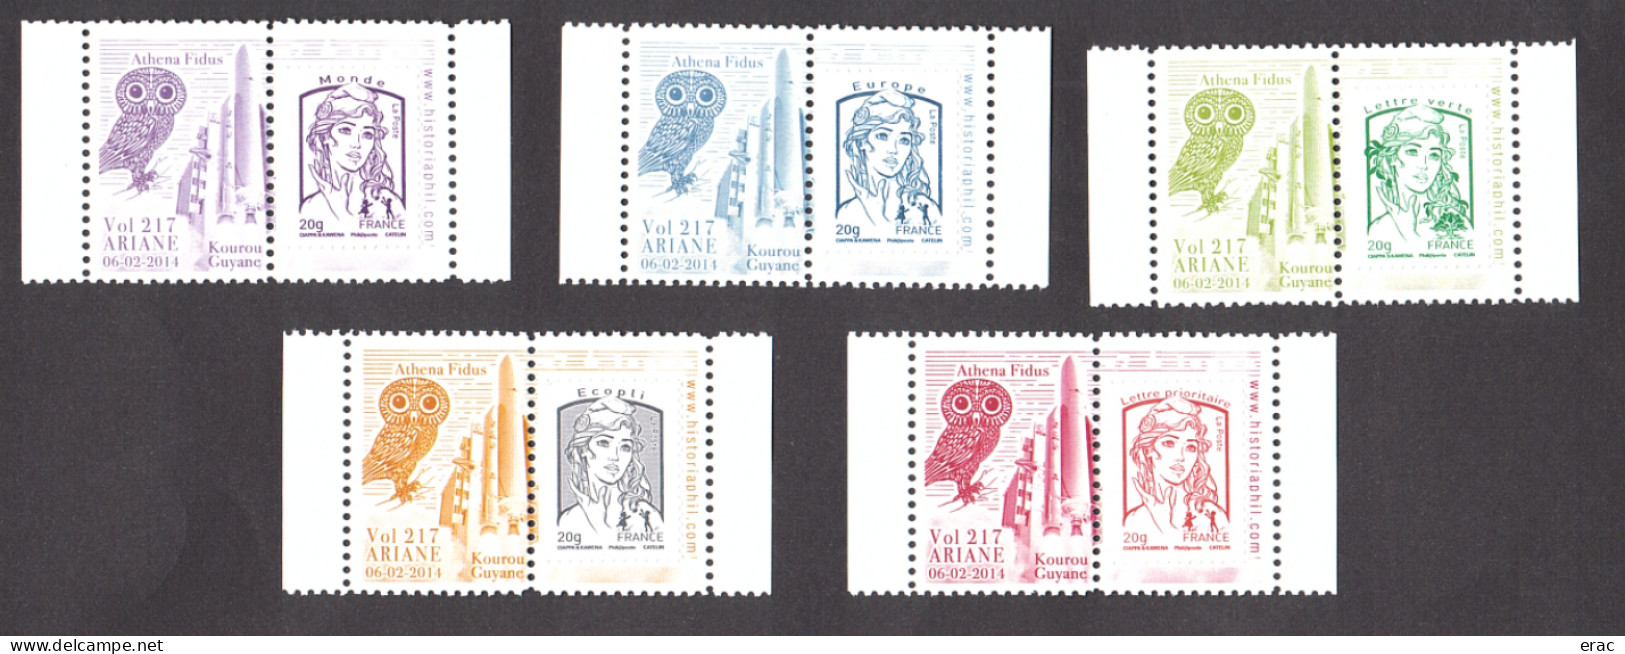 5 Porte-timbres Gommés - 2014 Ariane Vol 217 - Athena Fidus- Avec TVP Marianne De Ciappa & Kawena Neufs - 2013-2018 Marianne De Ciappa-Kawena